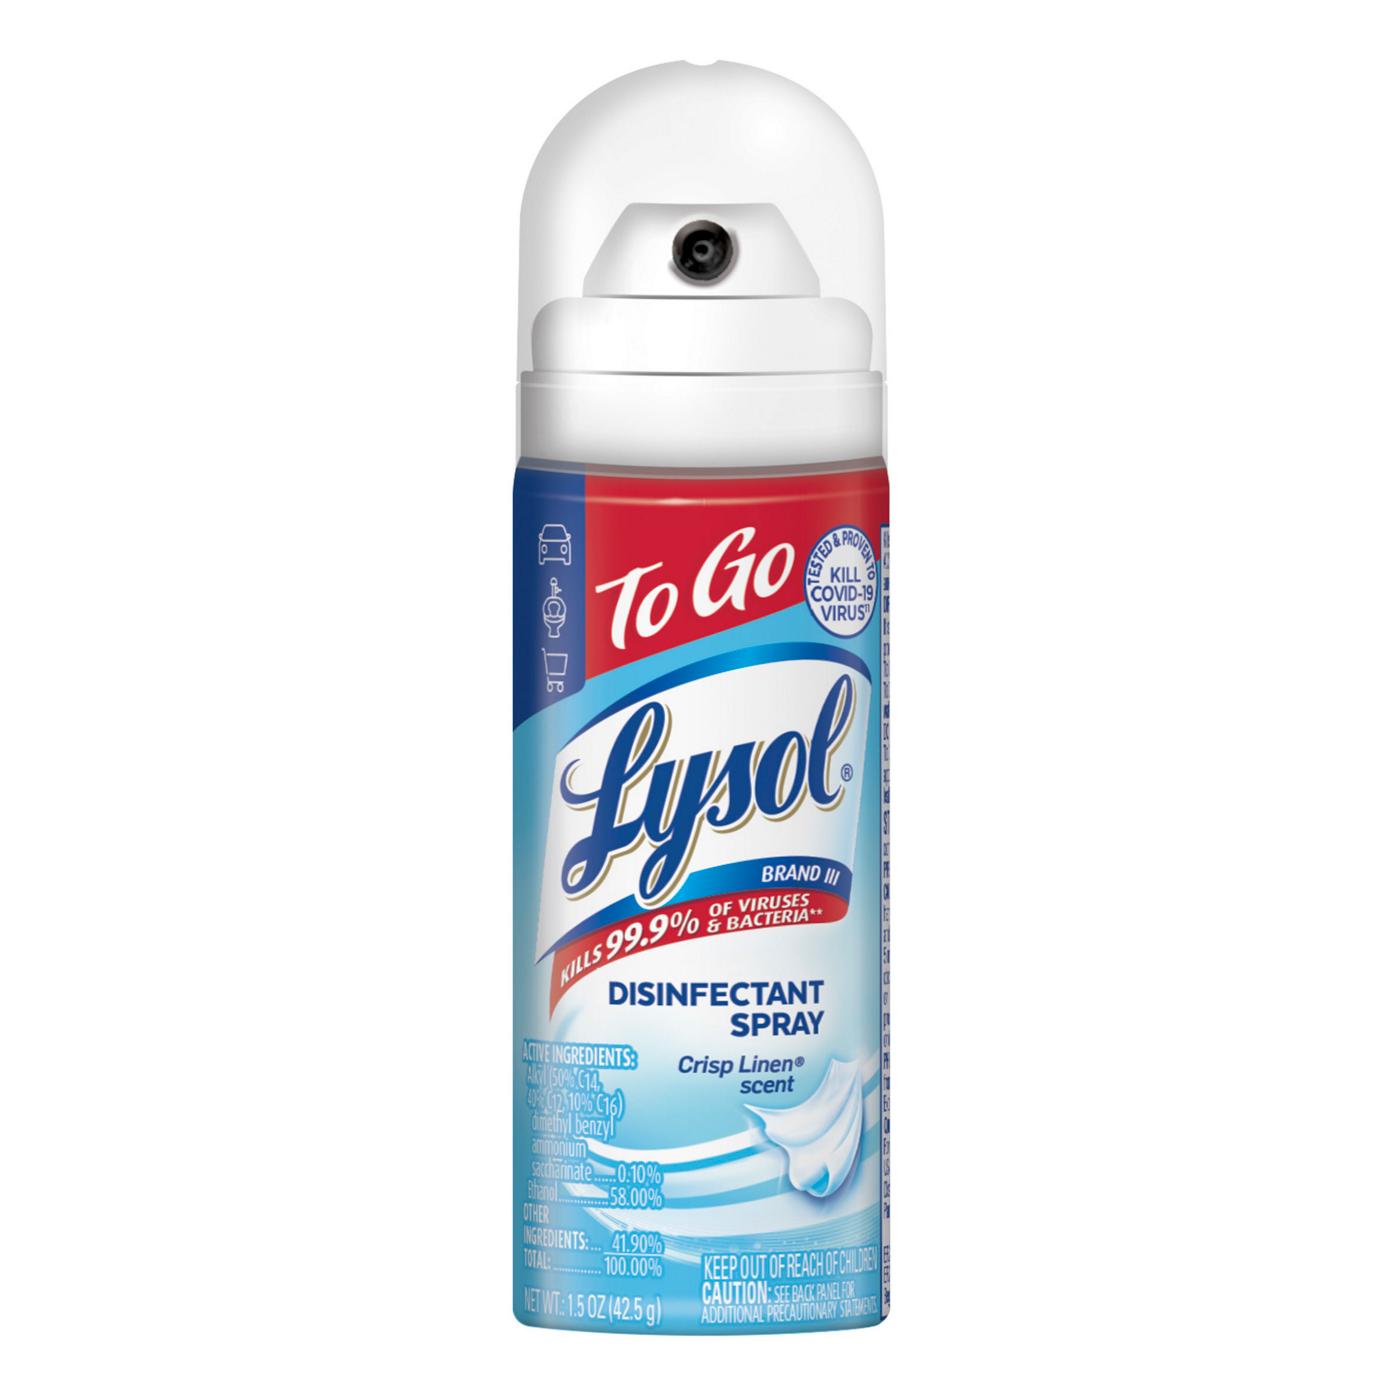 Lysol To Go Disinfectant Spray Crisp Linen; image 1 of 3